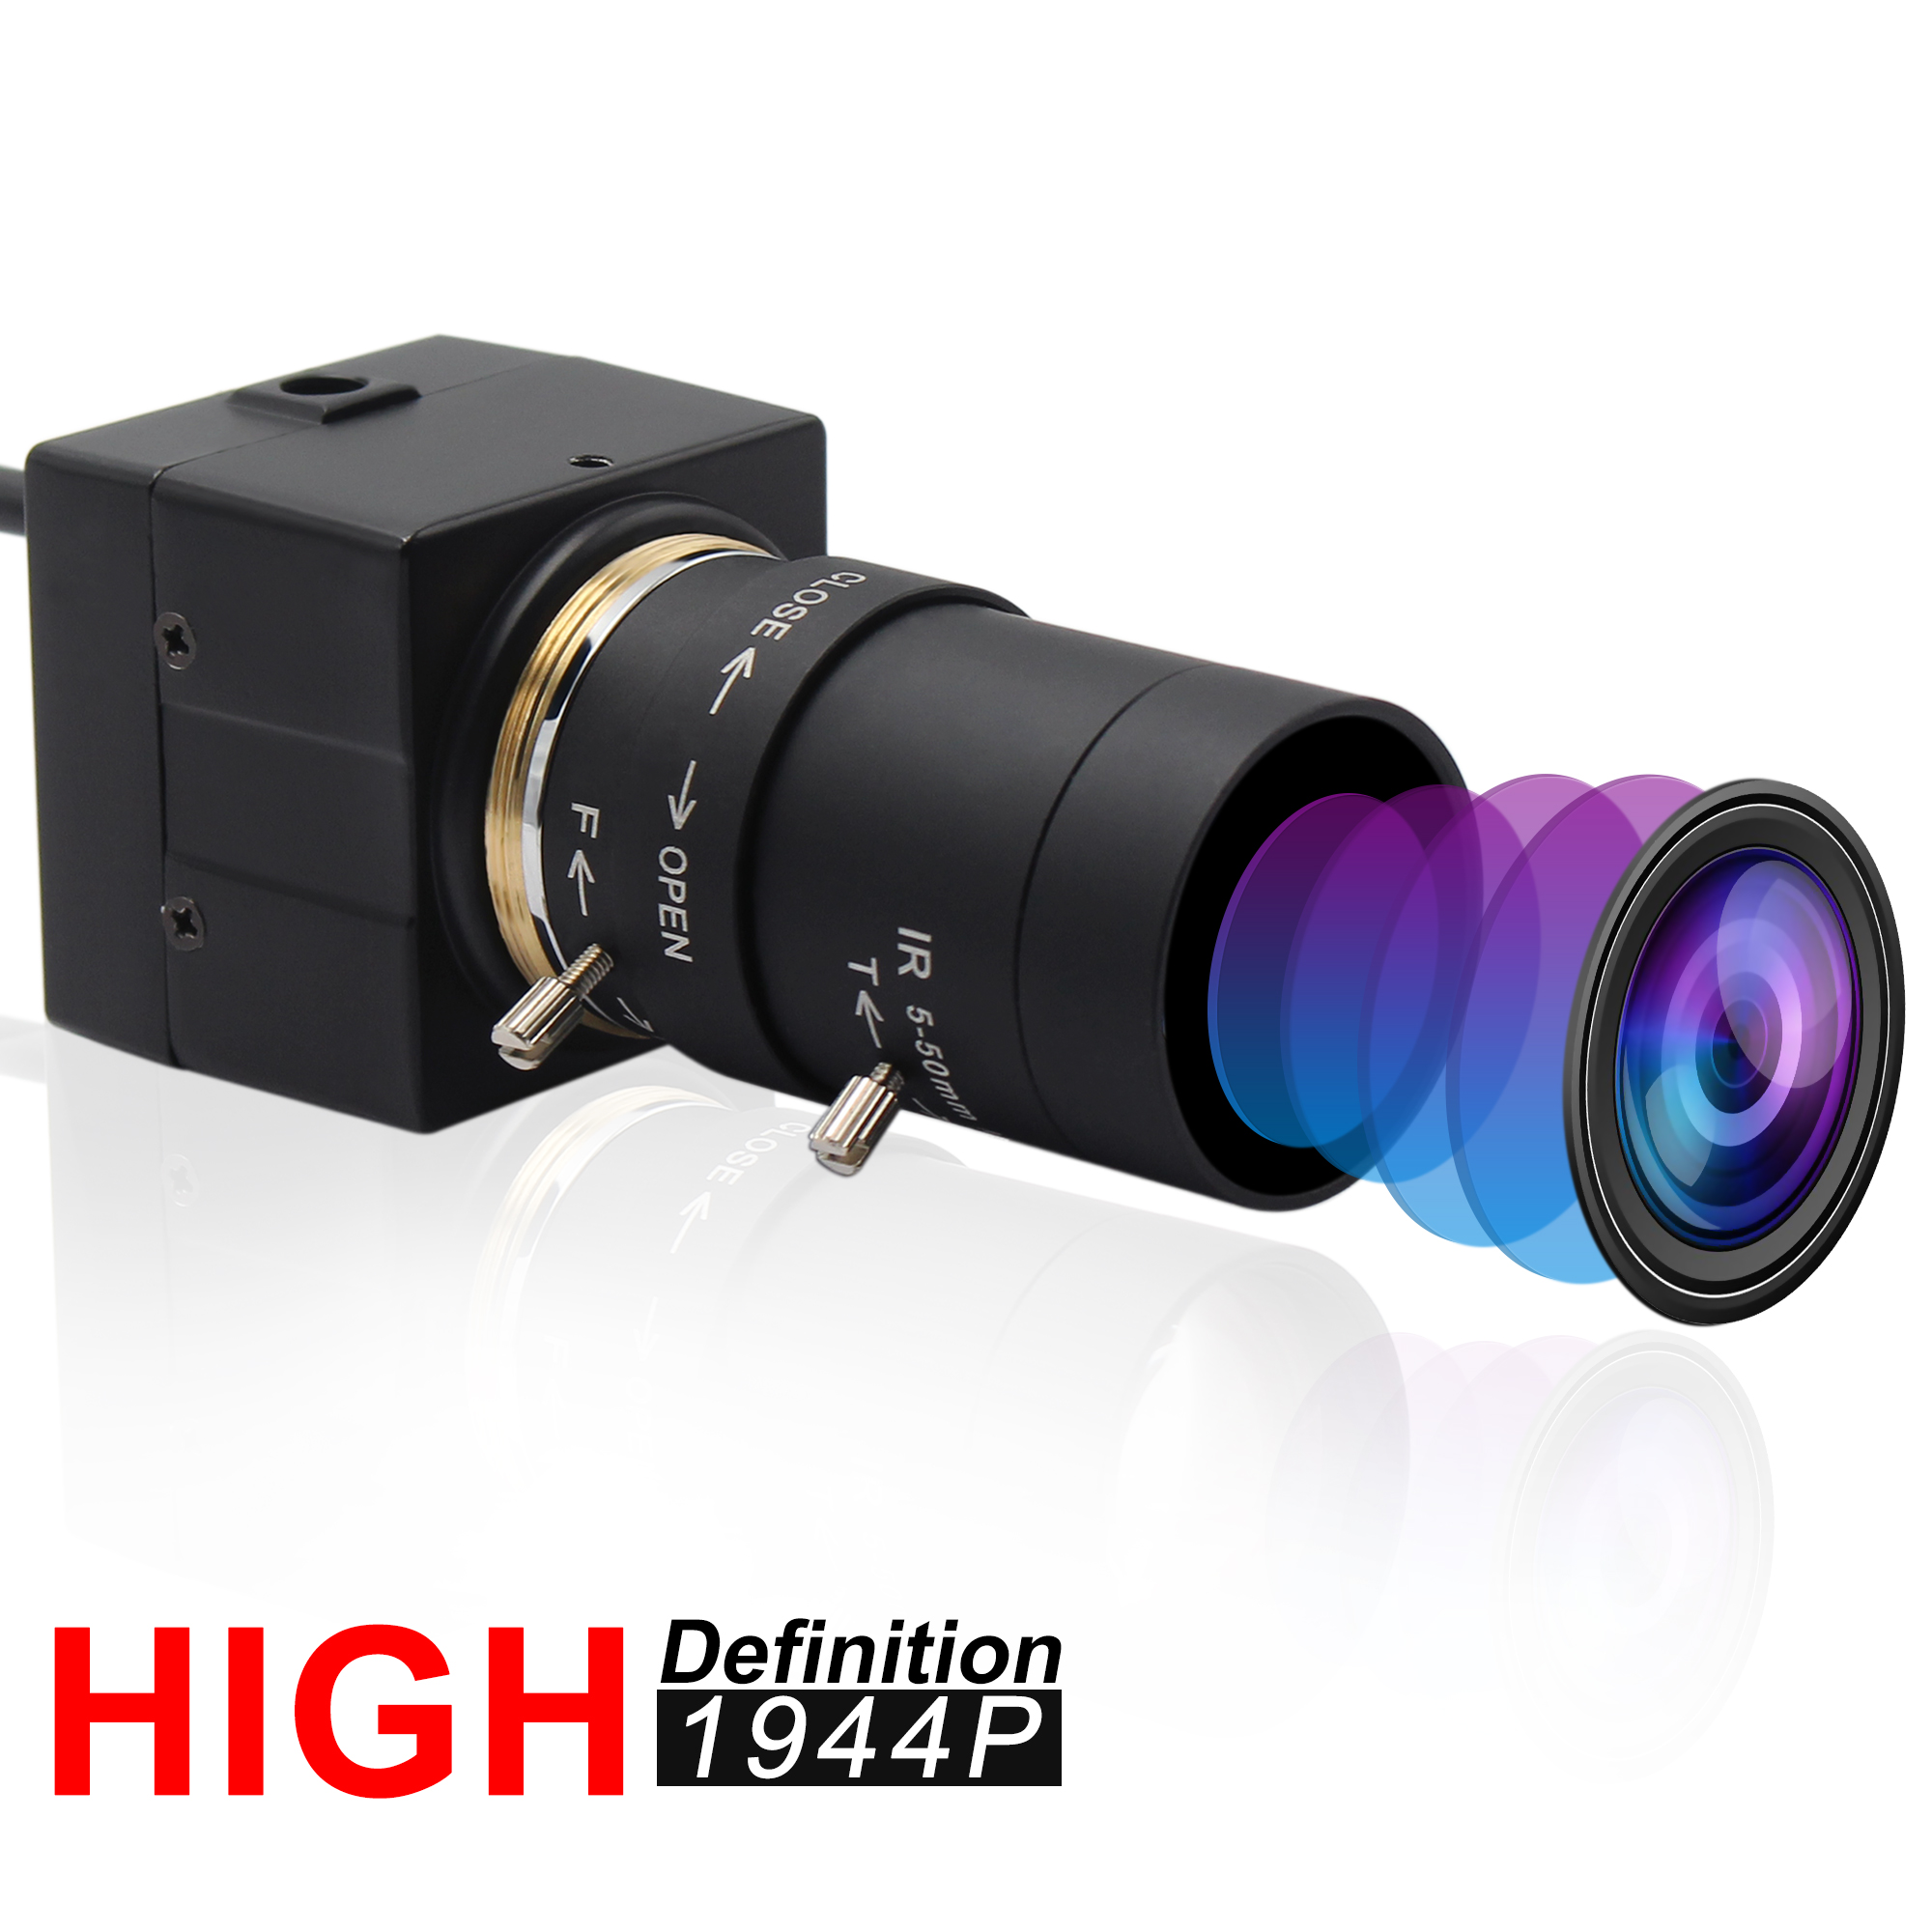 ELP 5-50mm Manual Focus Global Shutter USB2.0 Camera 60fps High frame rate AR0144 Black and White Image HD